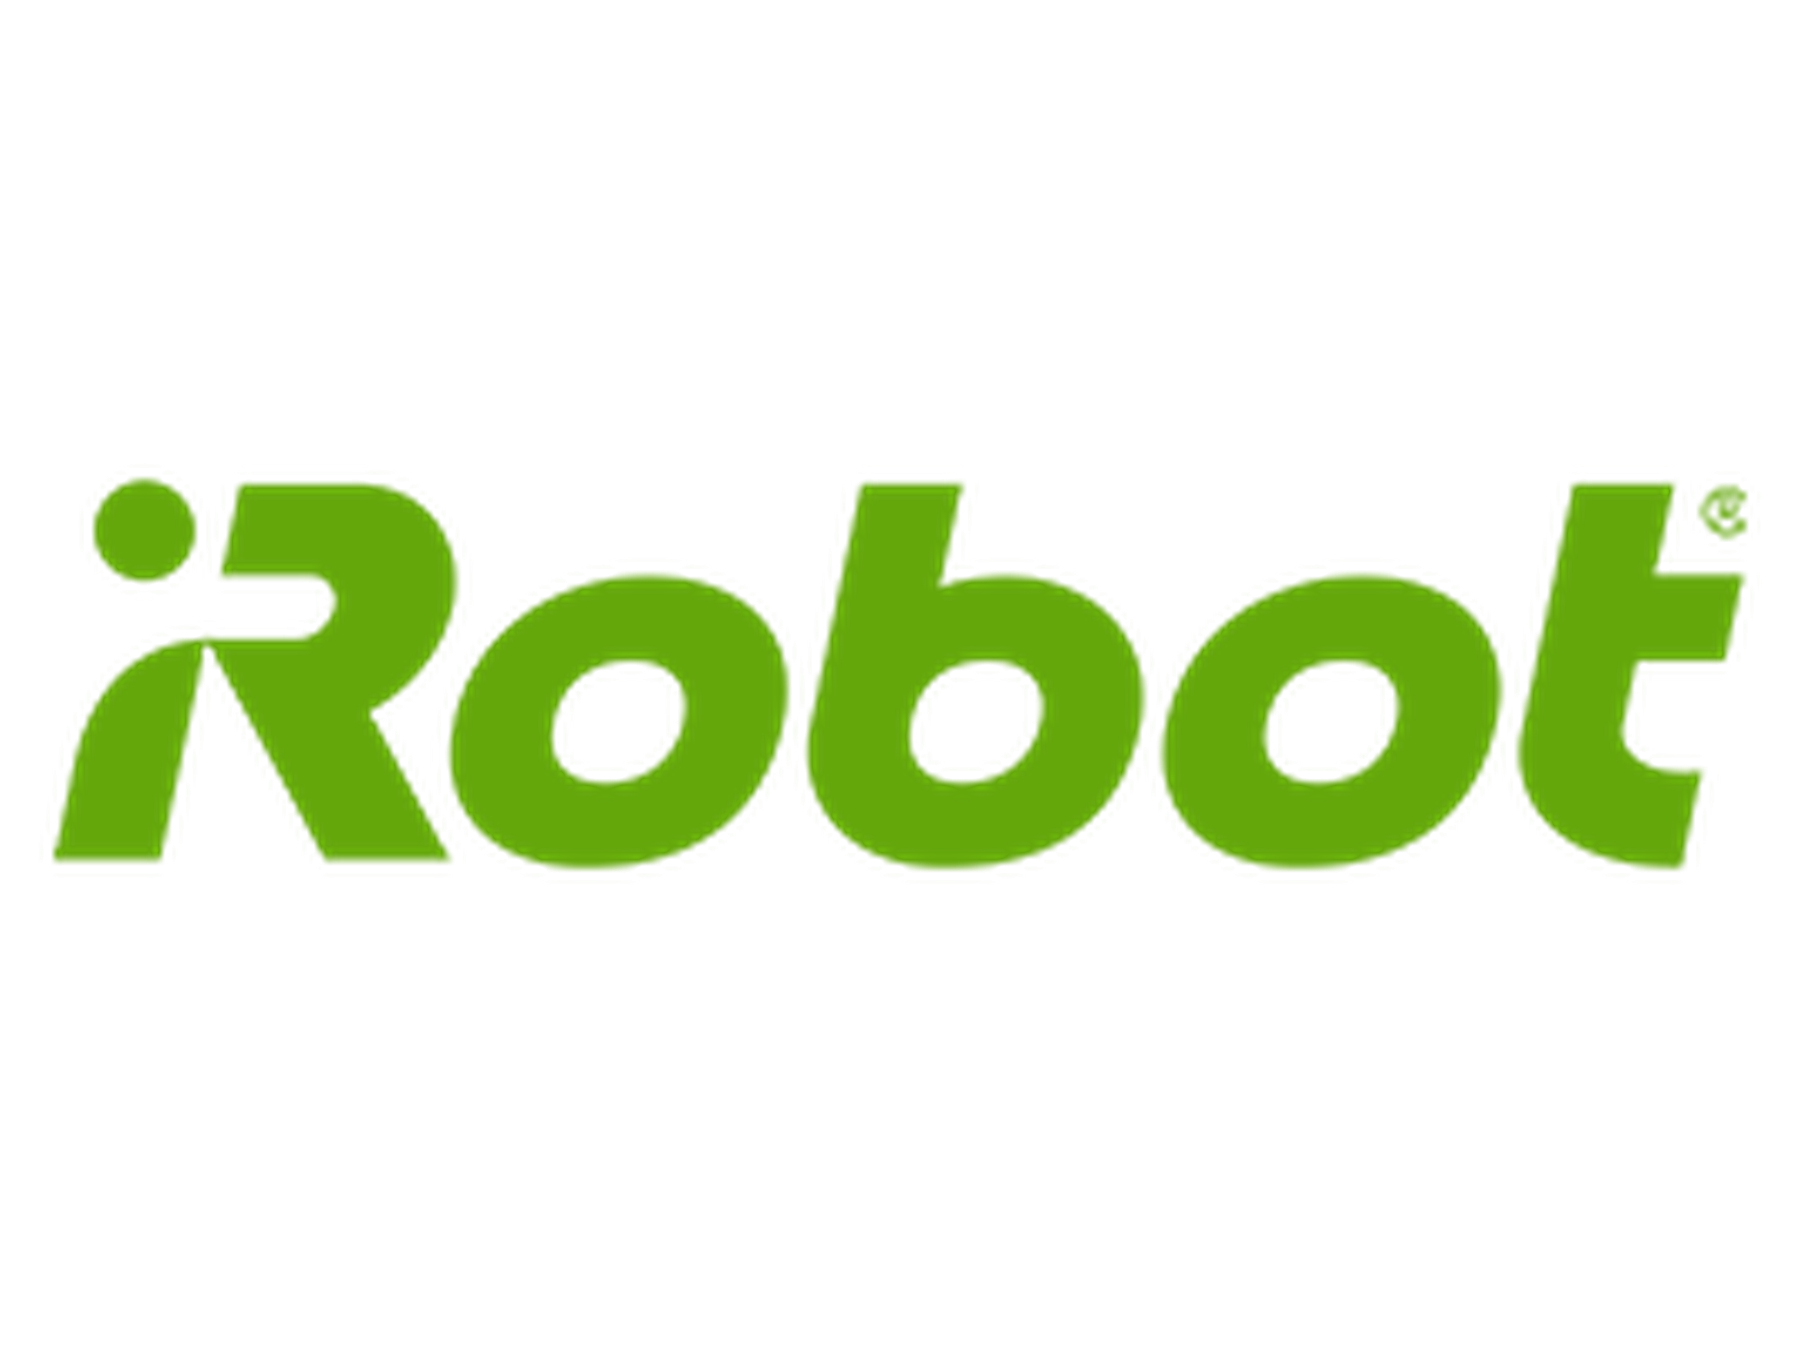 Codice sconto iRobot